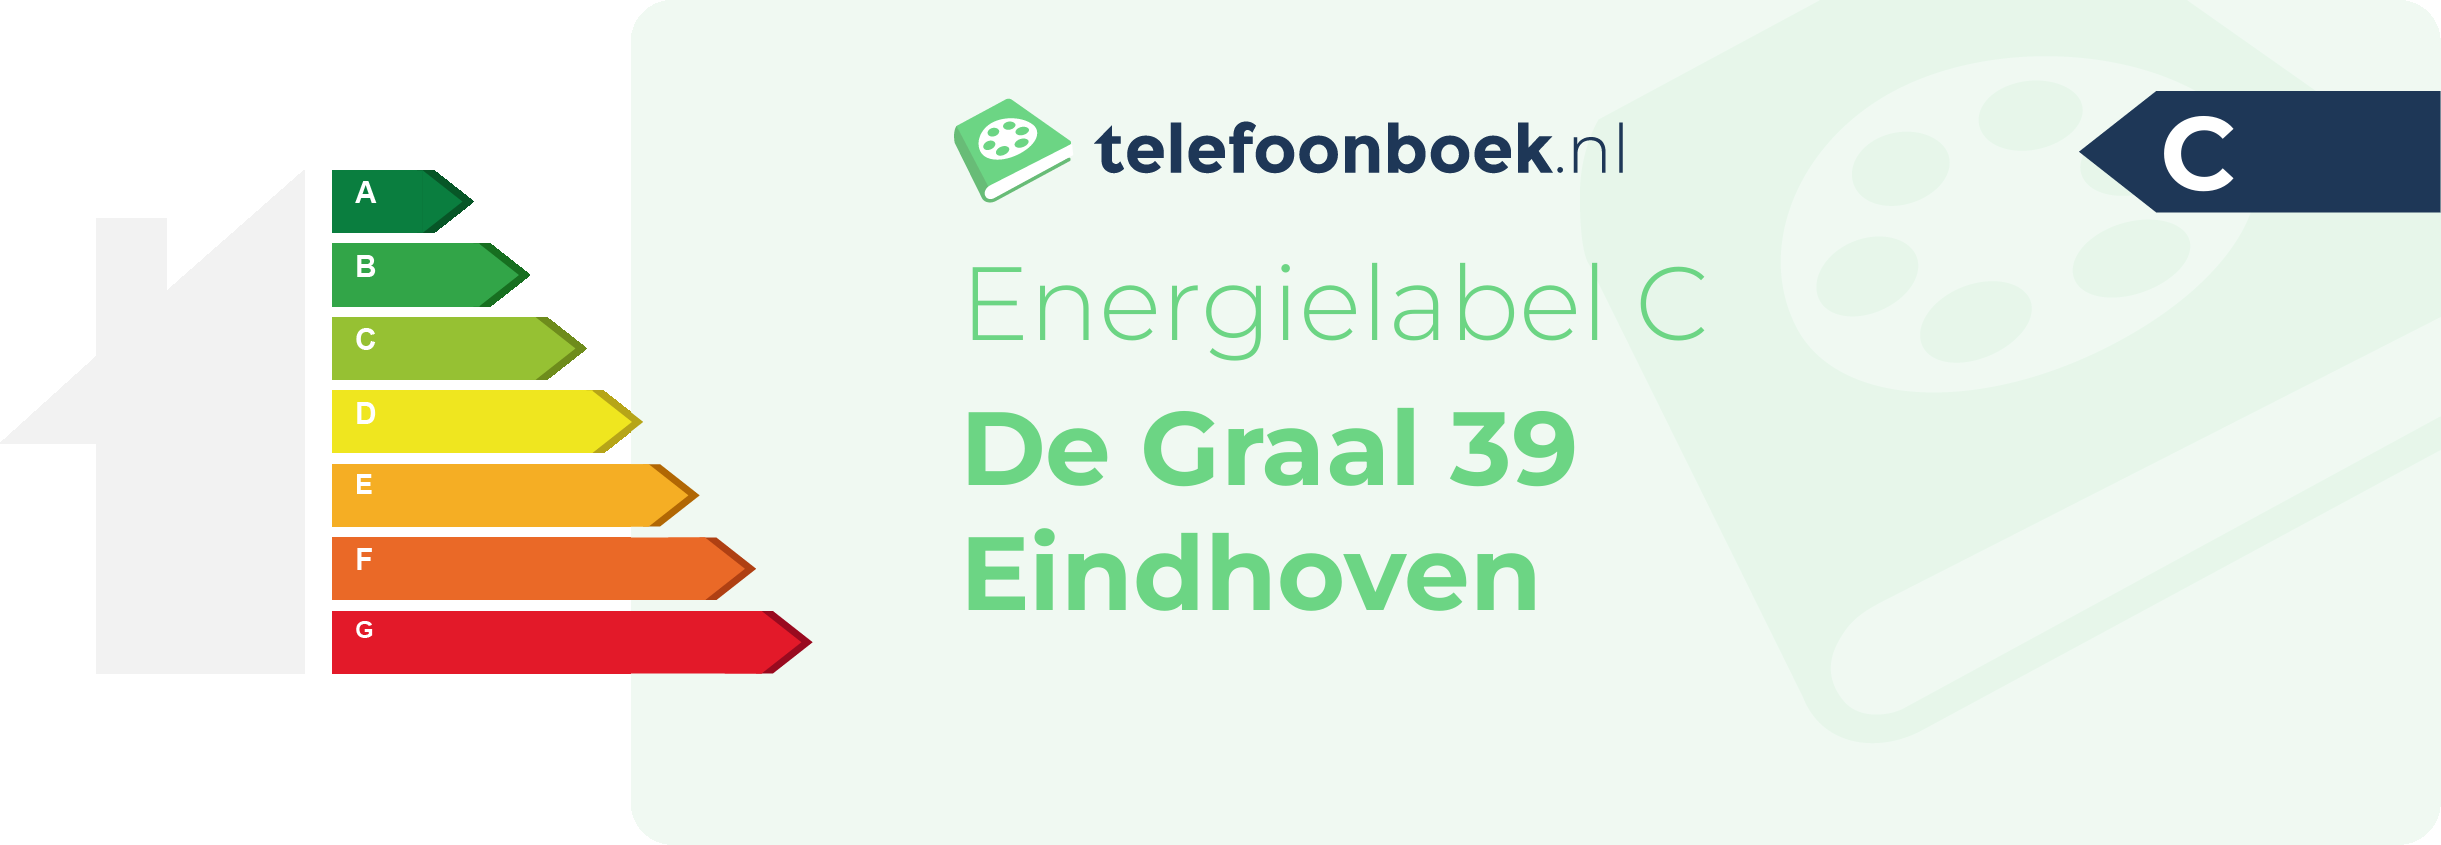 Energielabel De Graal 39 Eindhoven